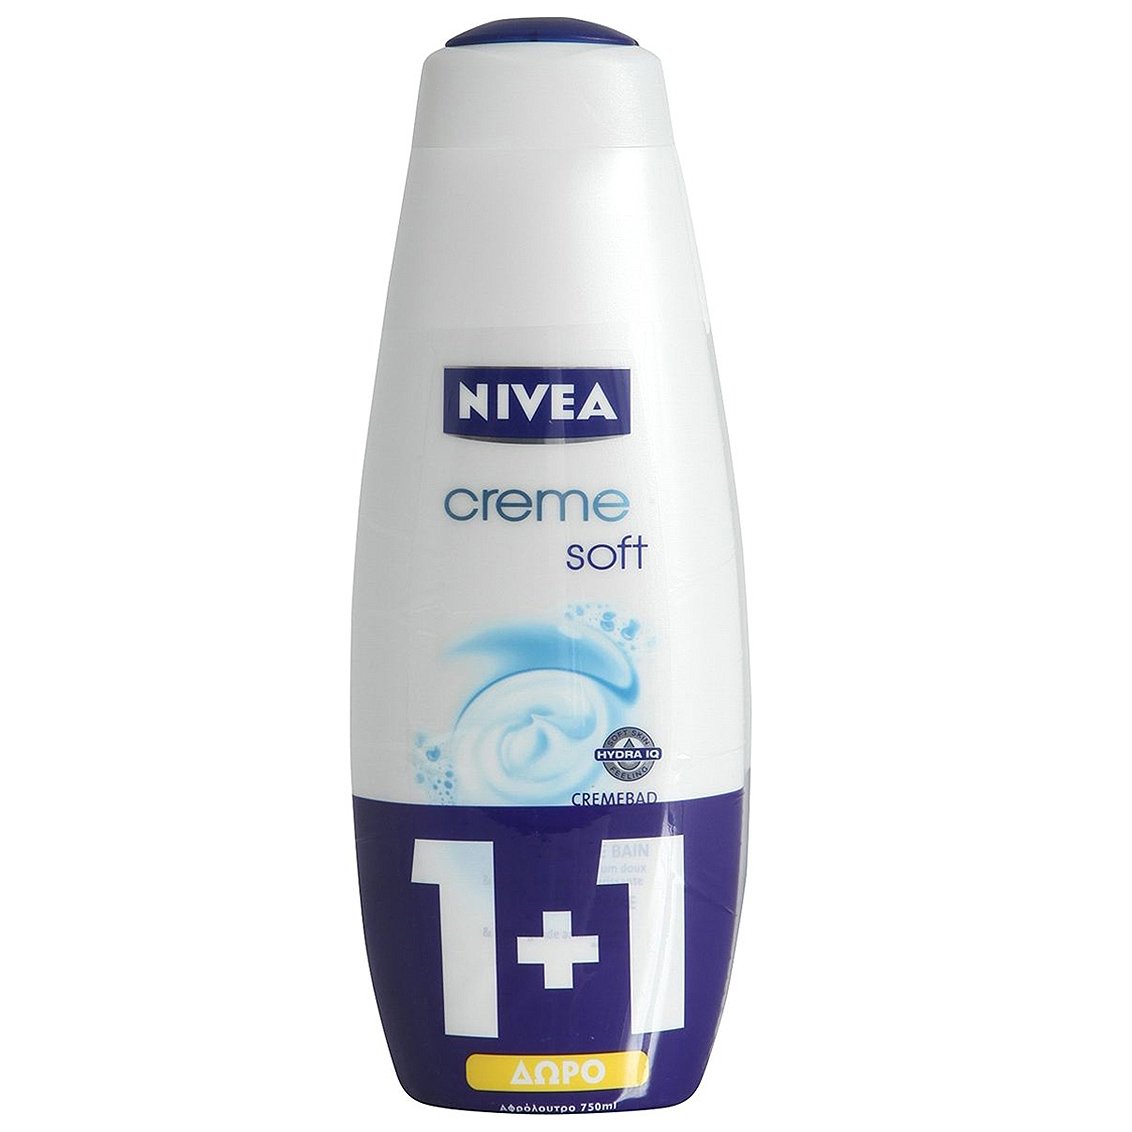 Nivea Creme Soft Αναζωογονητικό Κρεμώδες Αφρόλουτρο 2x750ml 1+1 Δώρο